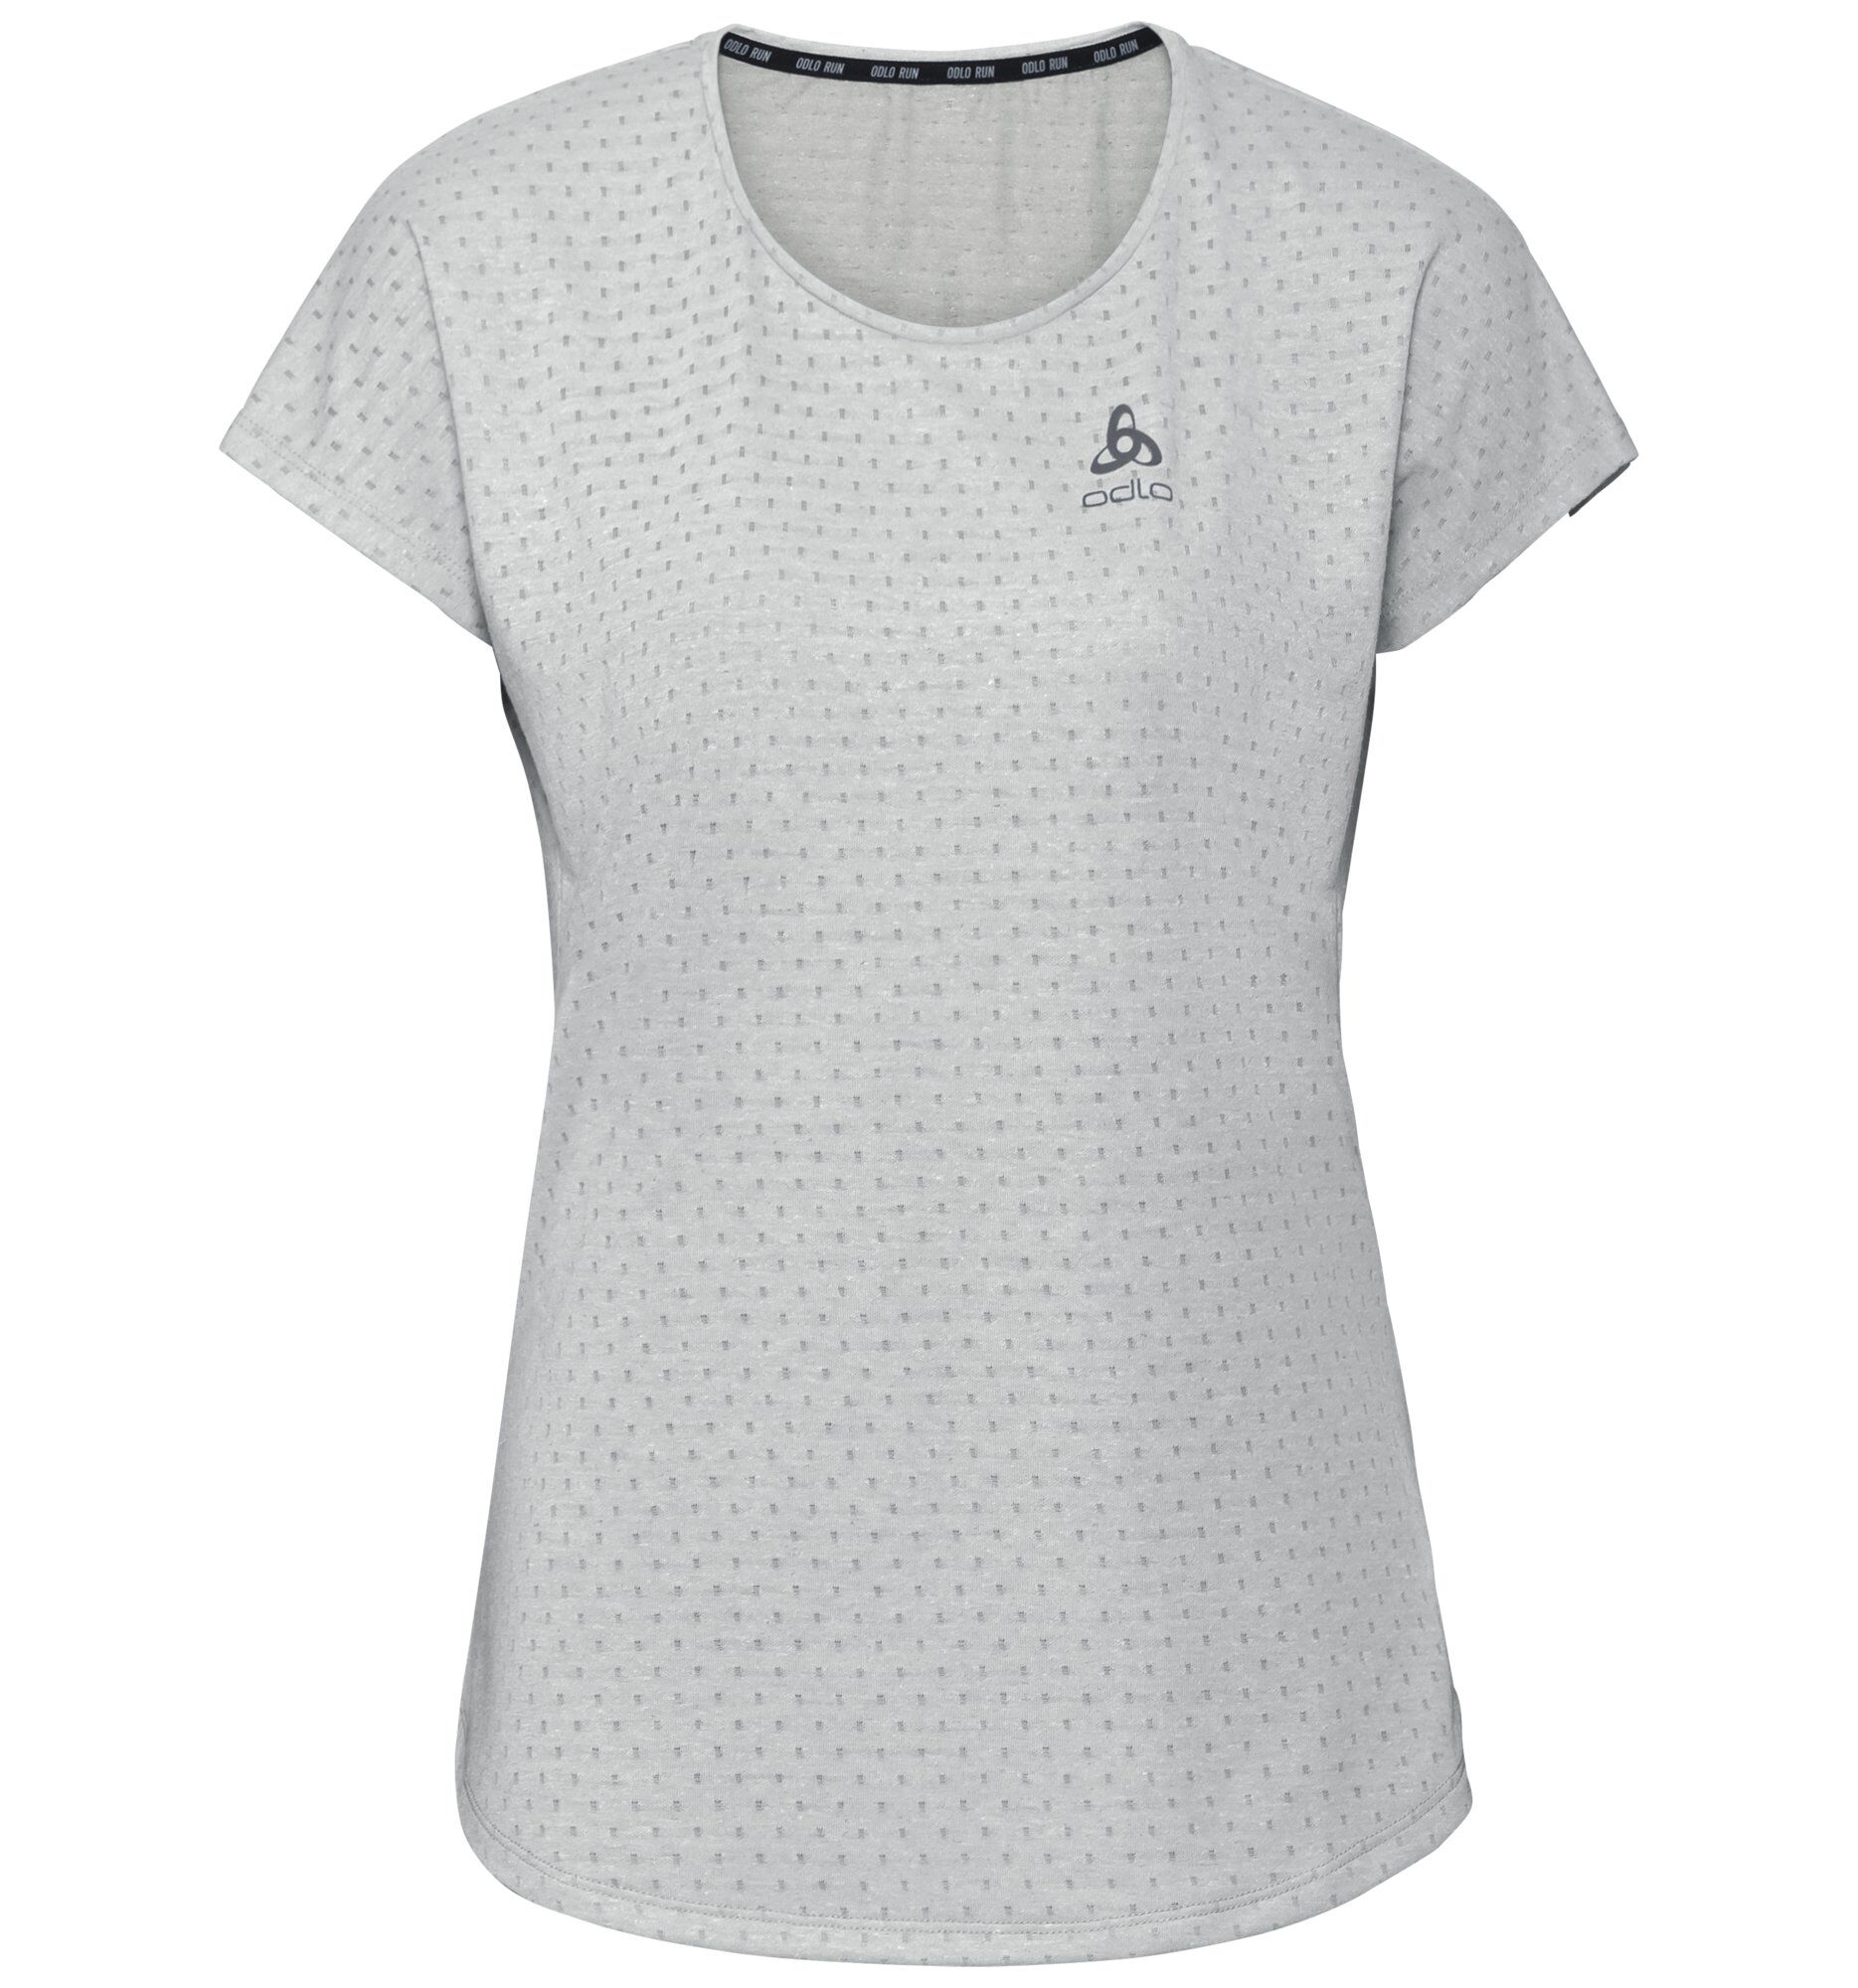 Odlo - Millennium Linencool - Camiseta - Mujer